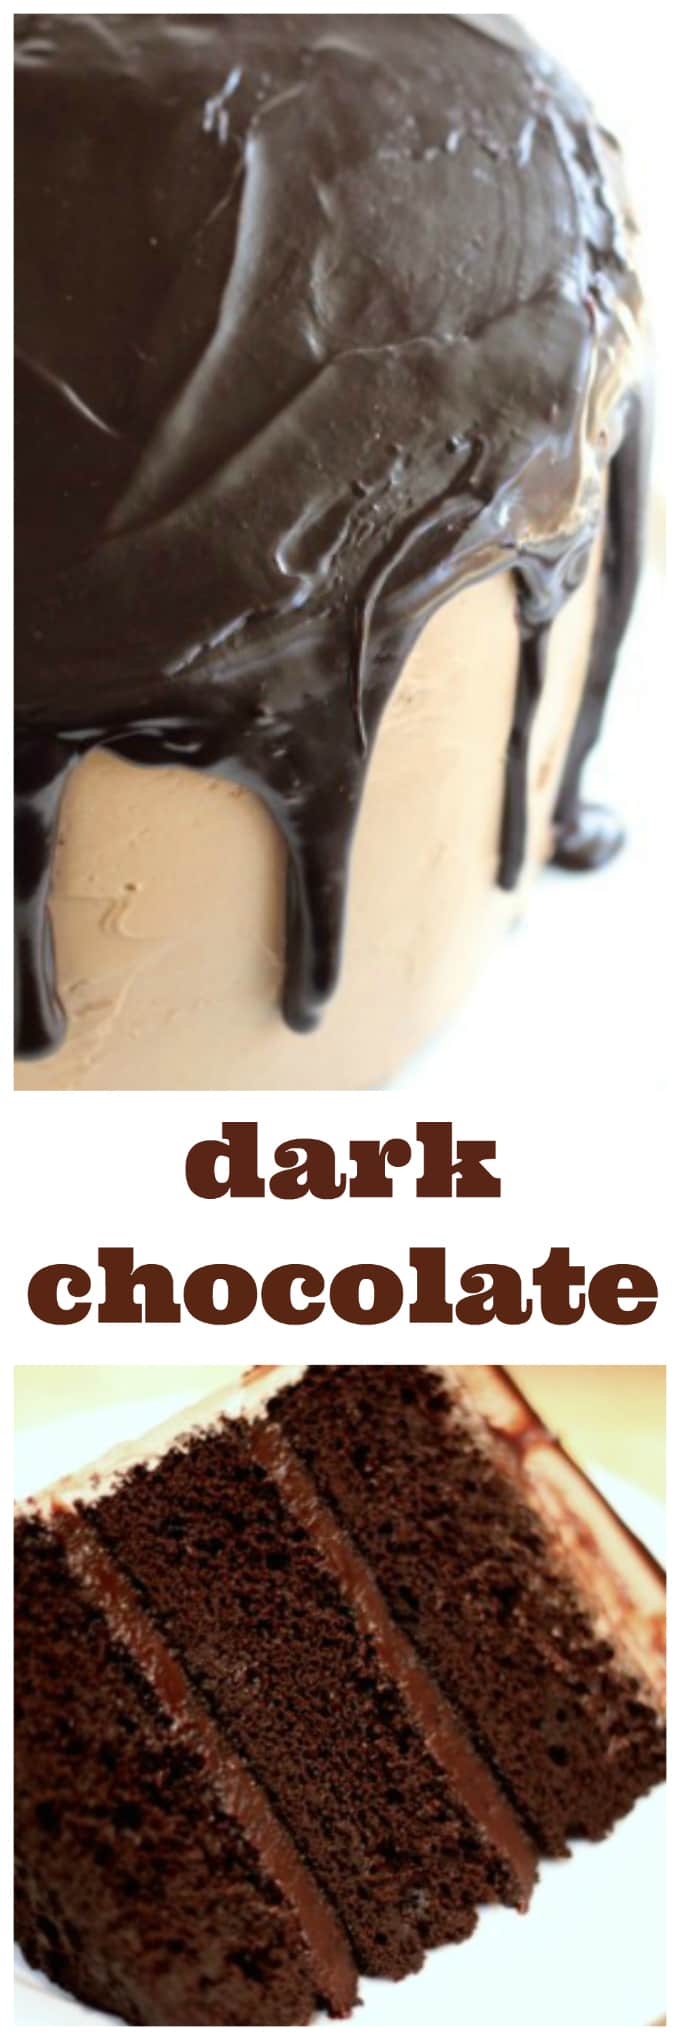 dark chocolate fudge cake @createdbydiane